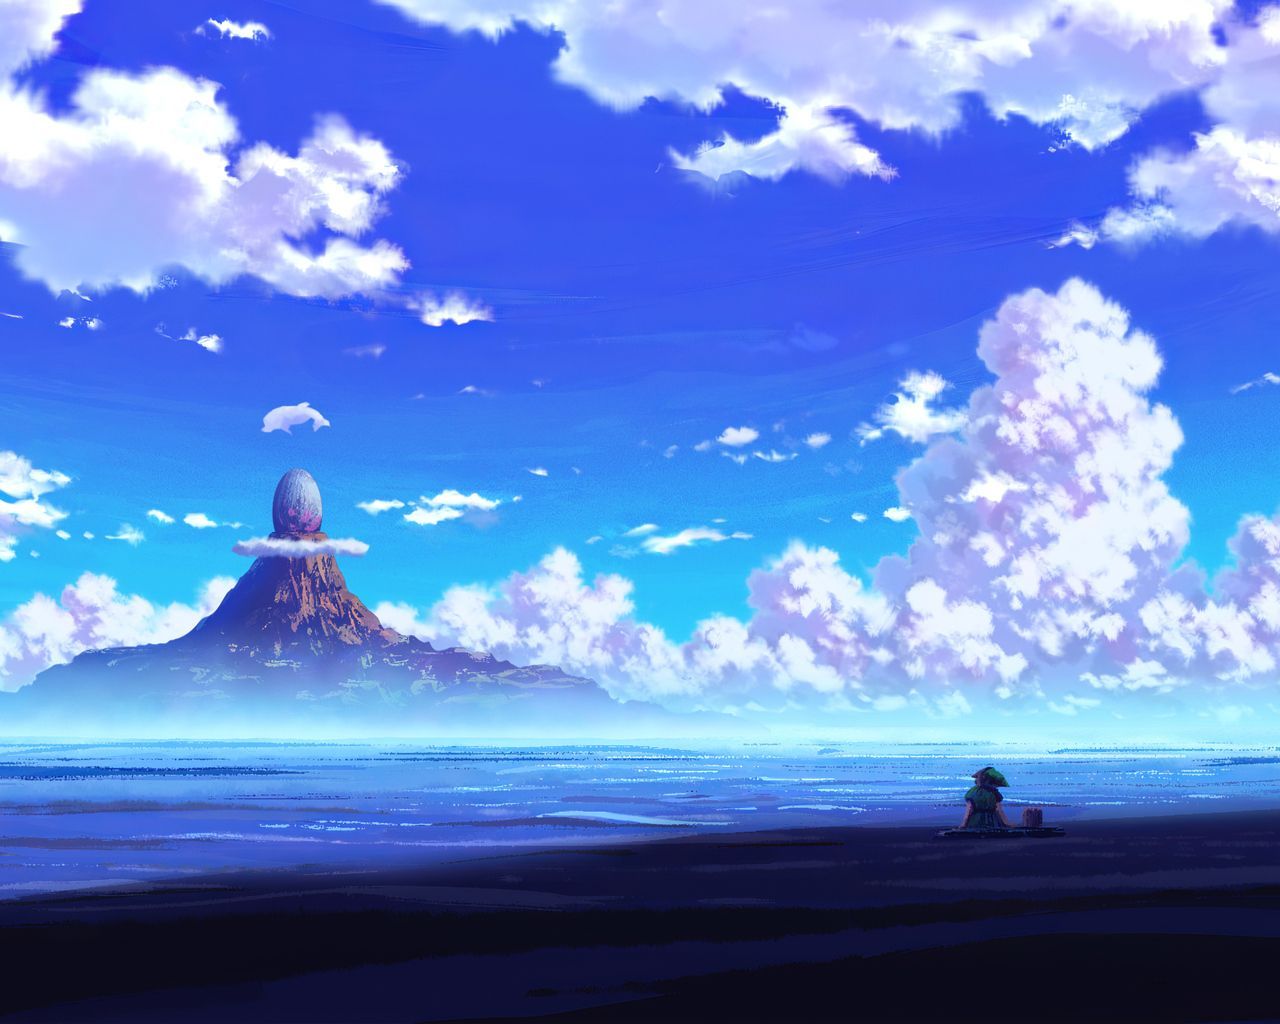 Anime scenery wallpaper desktop background wallpaper for desktop background for macbook and mobile devices - 1280x1024